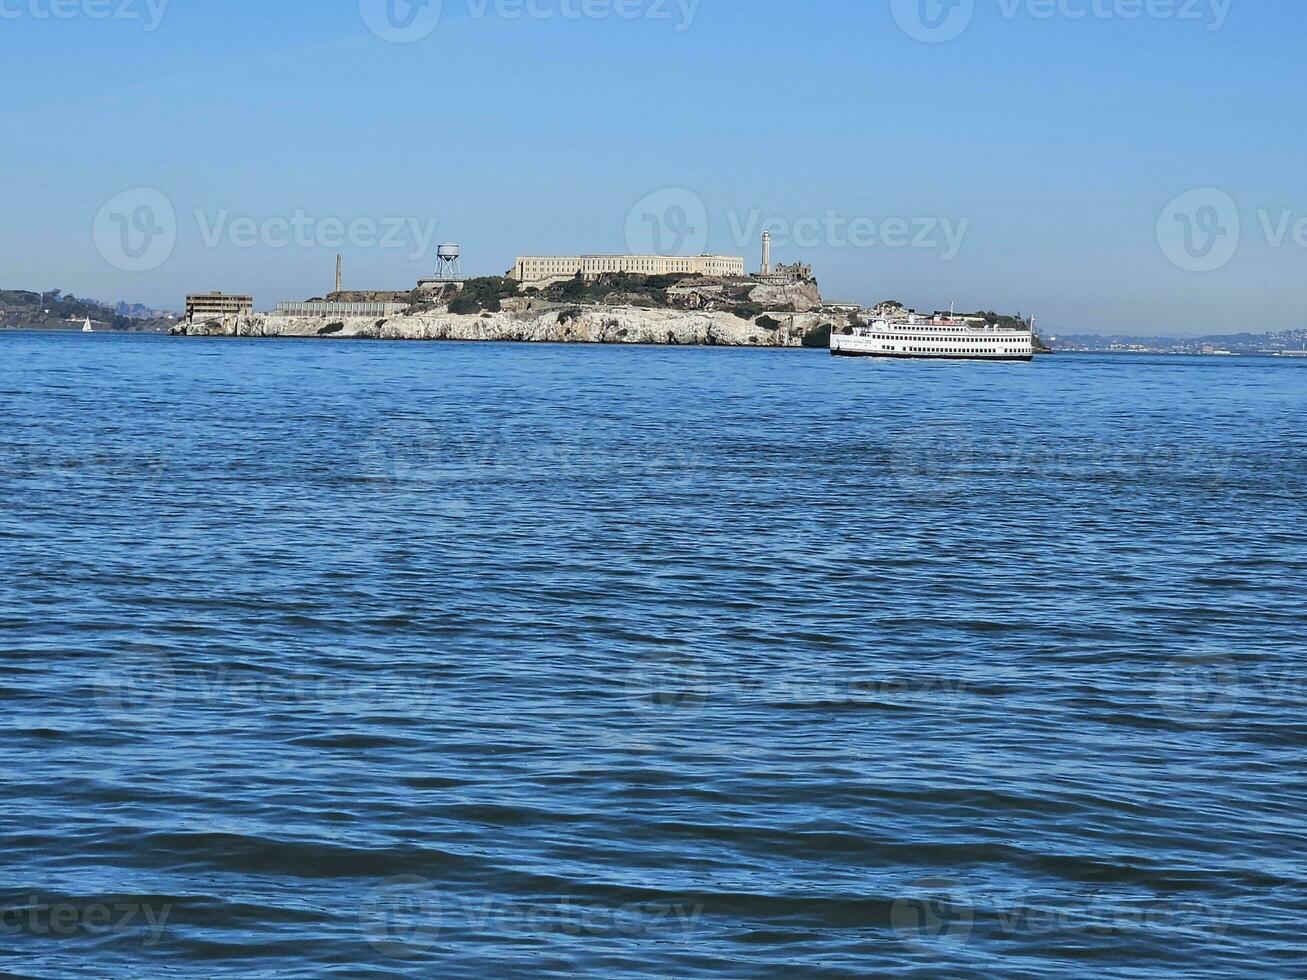 View of Alcatraz Island from Fort Mason port in San Francisco California photo